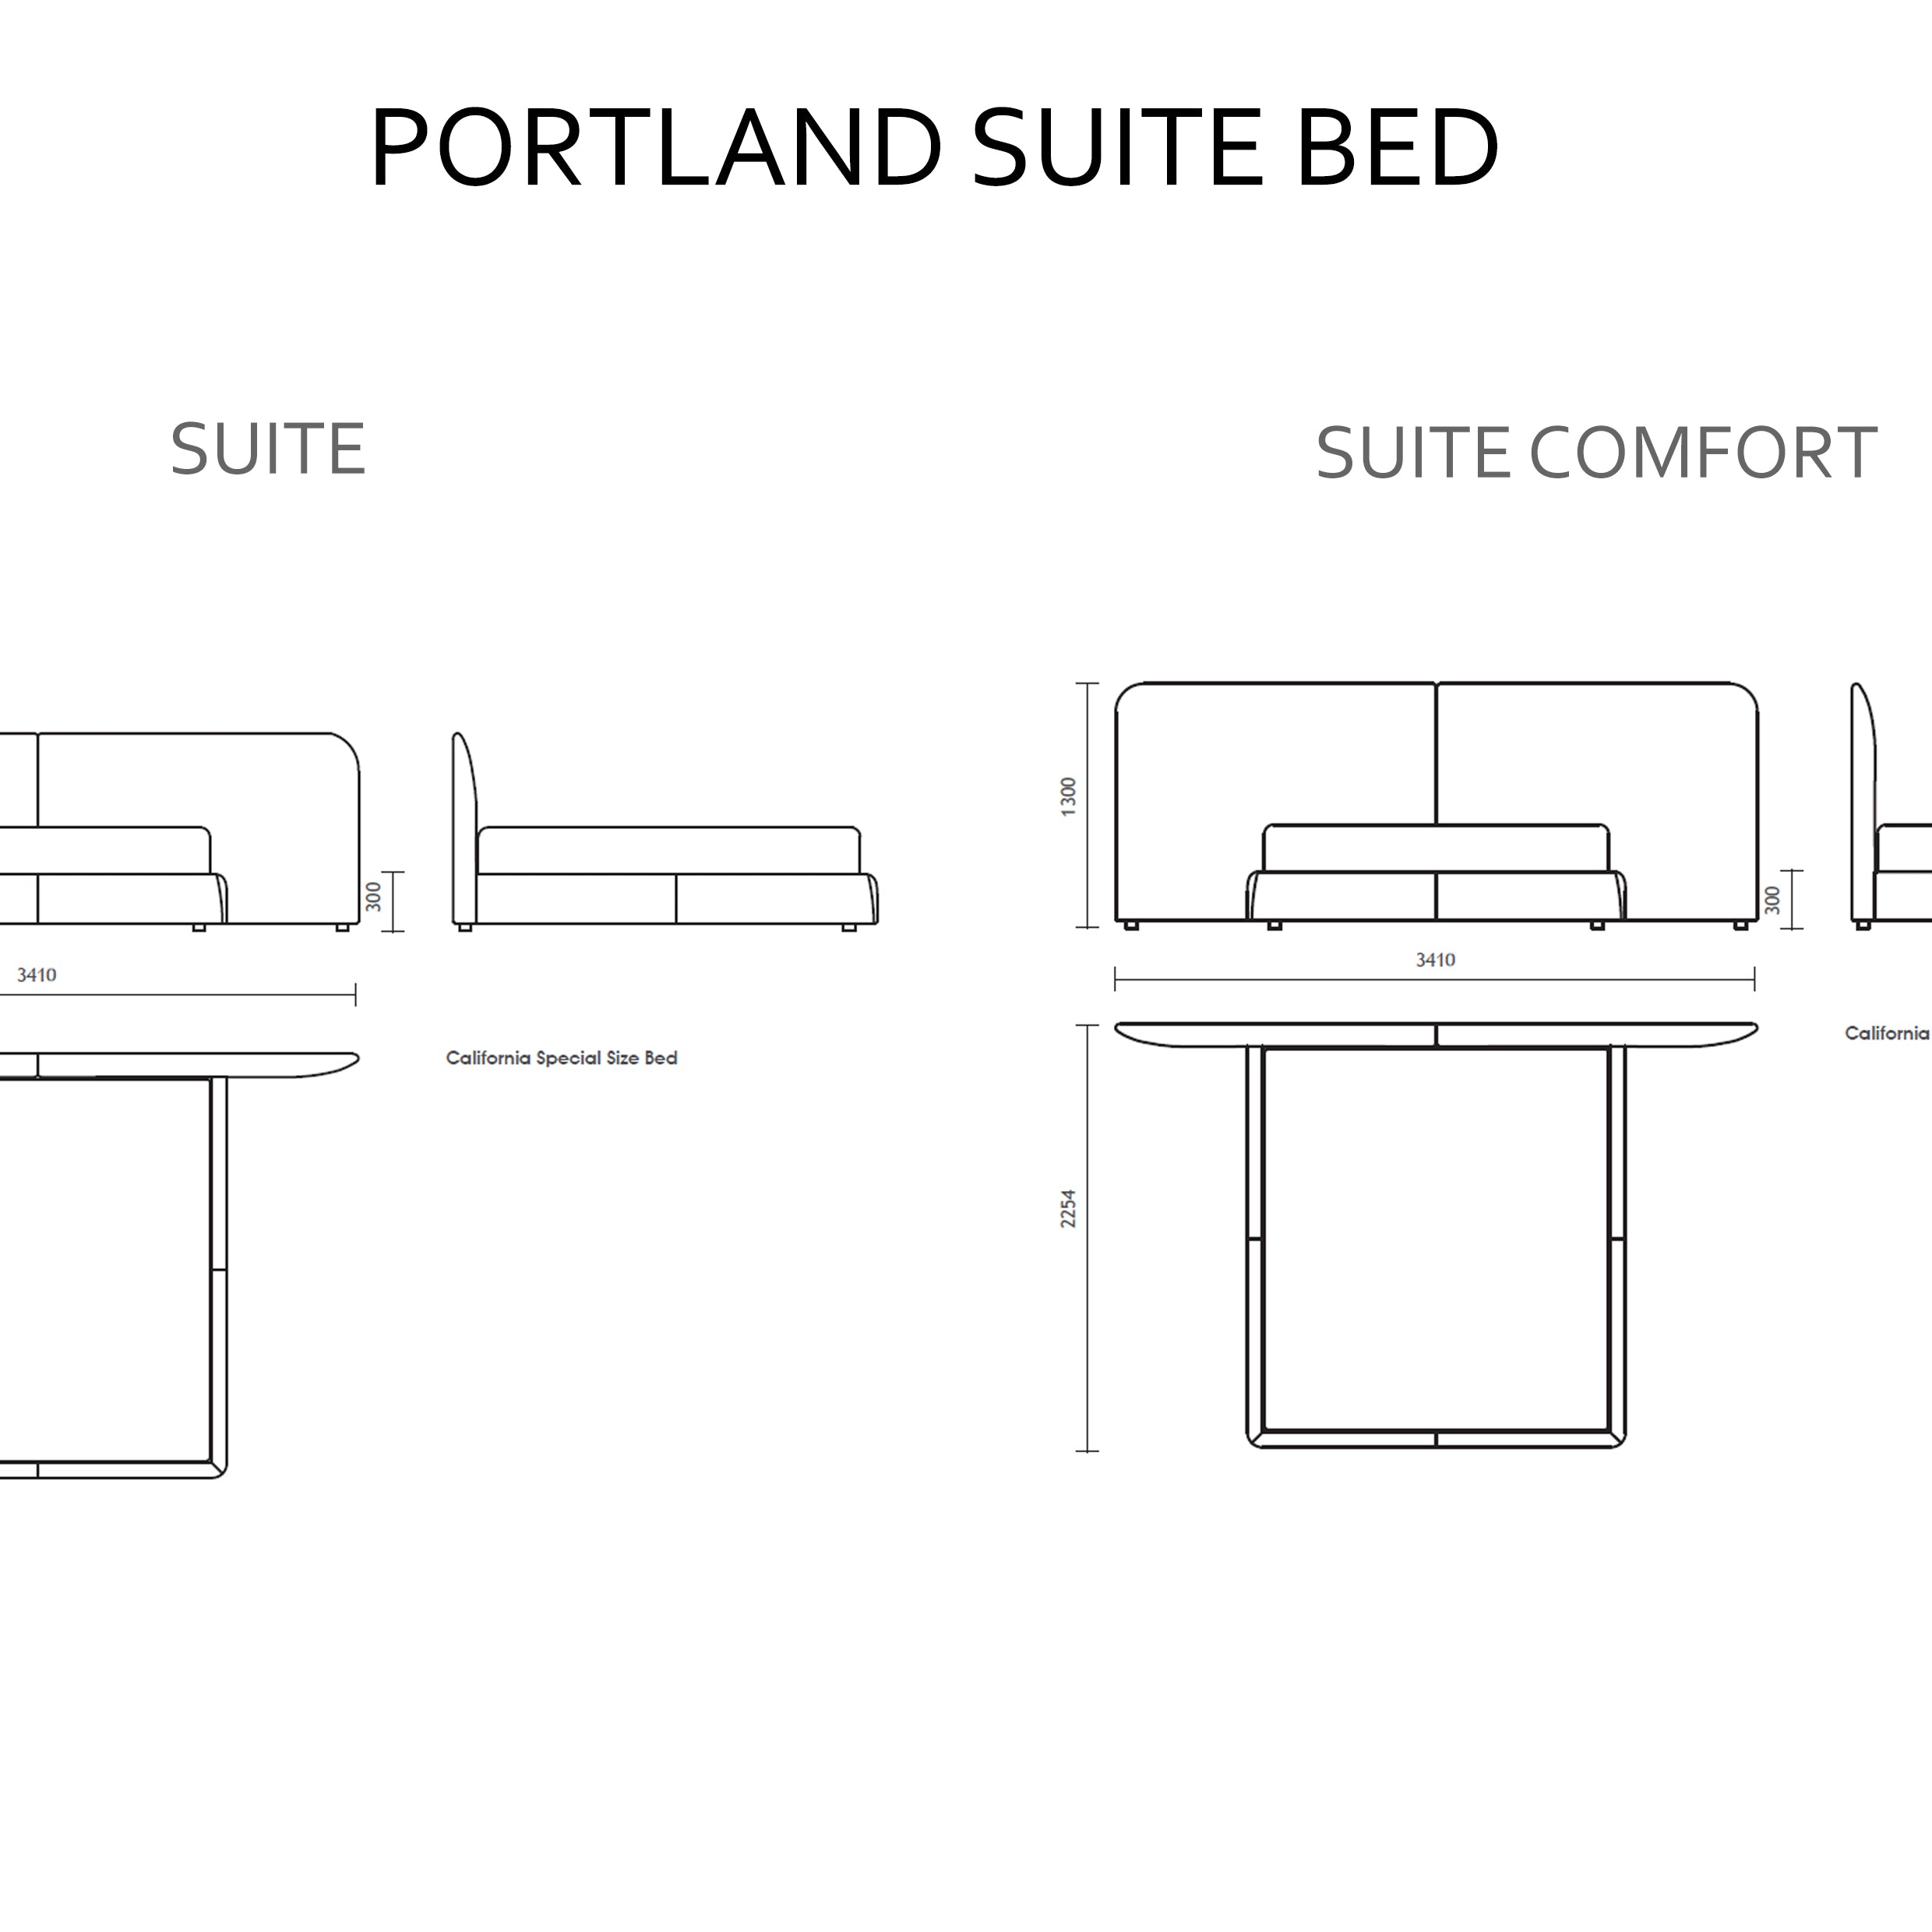 Portland Suite bed